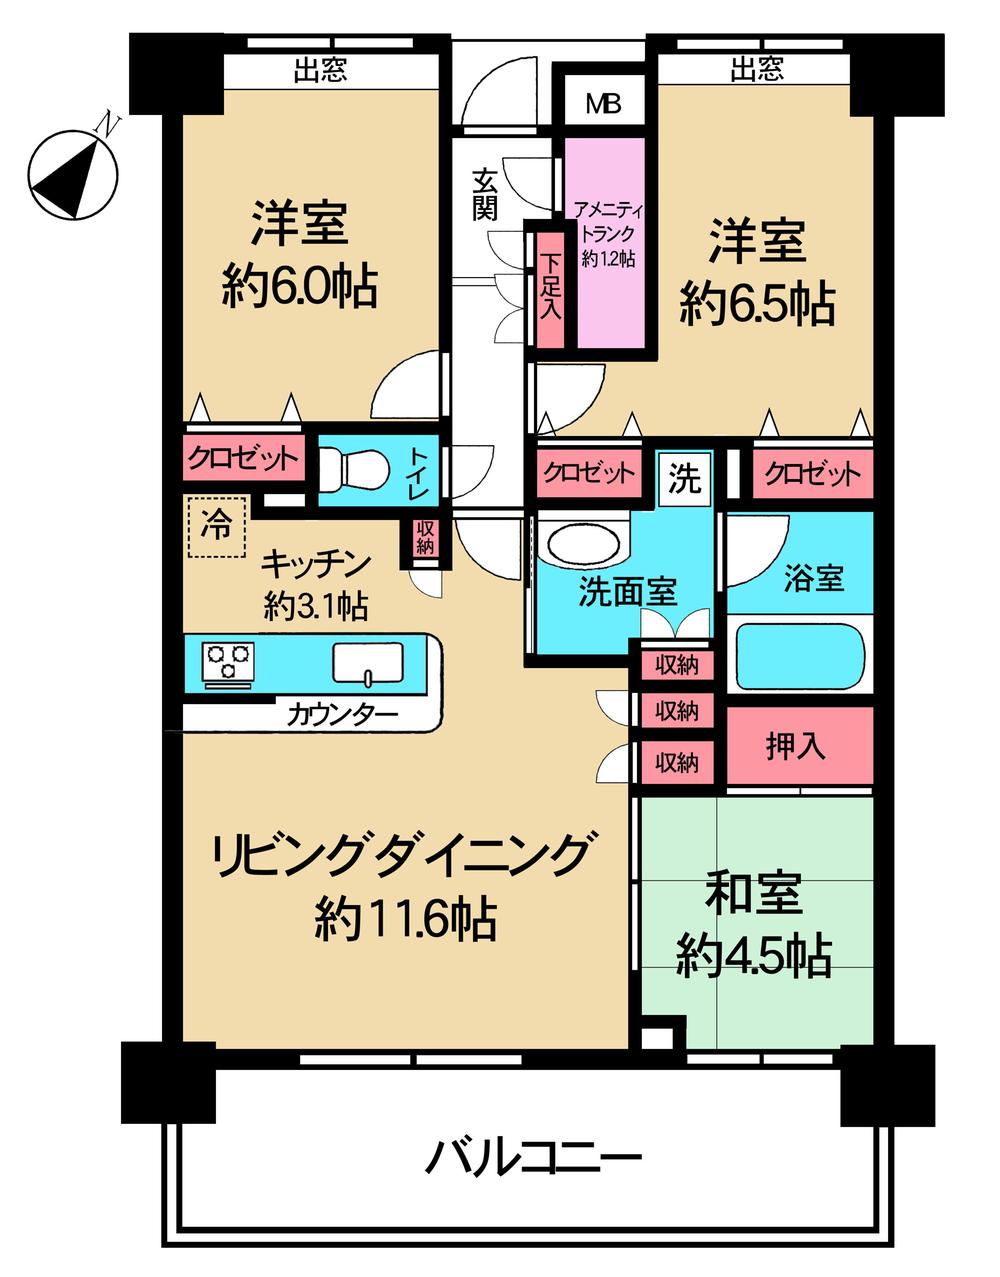 Floor plan. 3LDK, Price 18.5 million yen, Occupied area 72.81 sq m , Balcony area 14.7 sq m